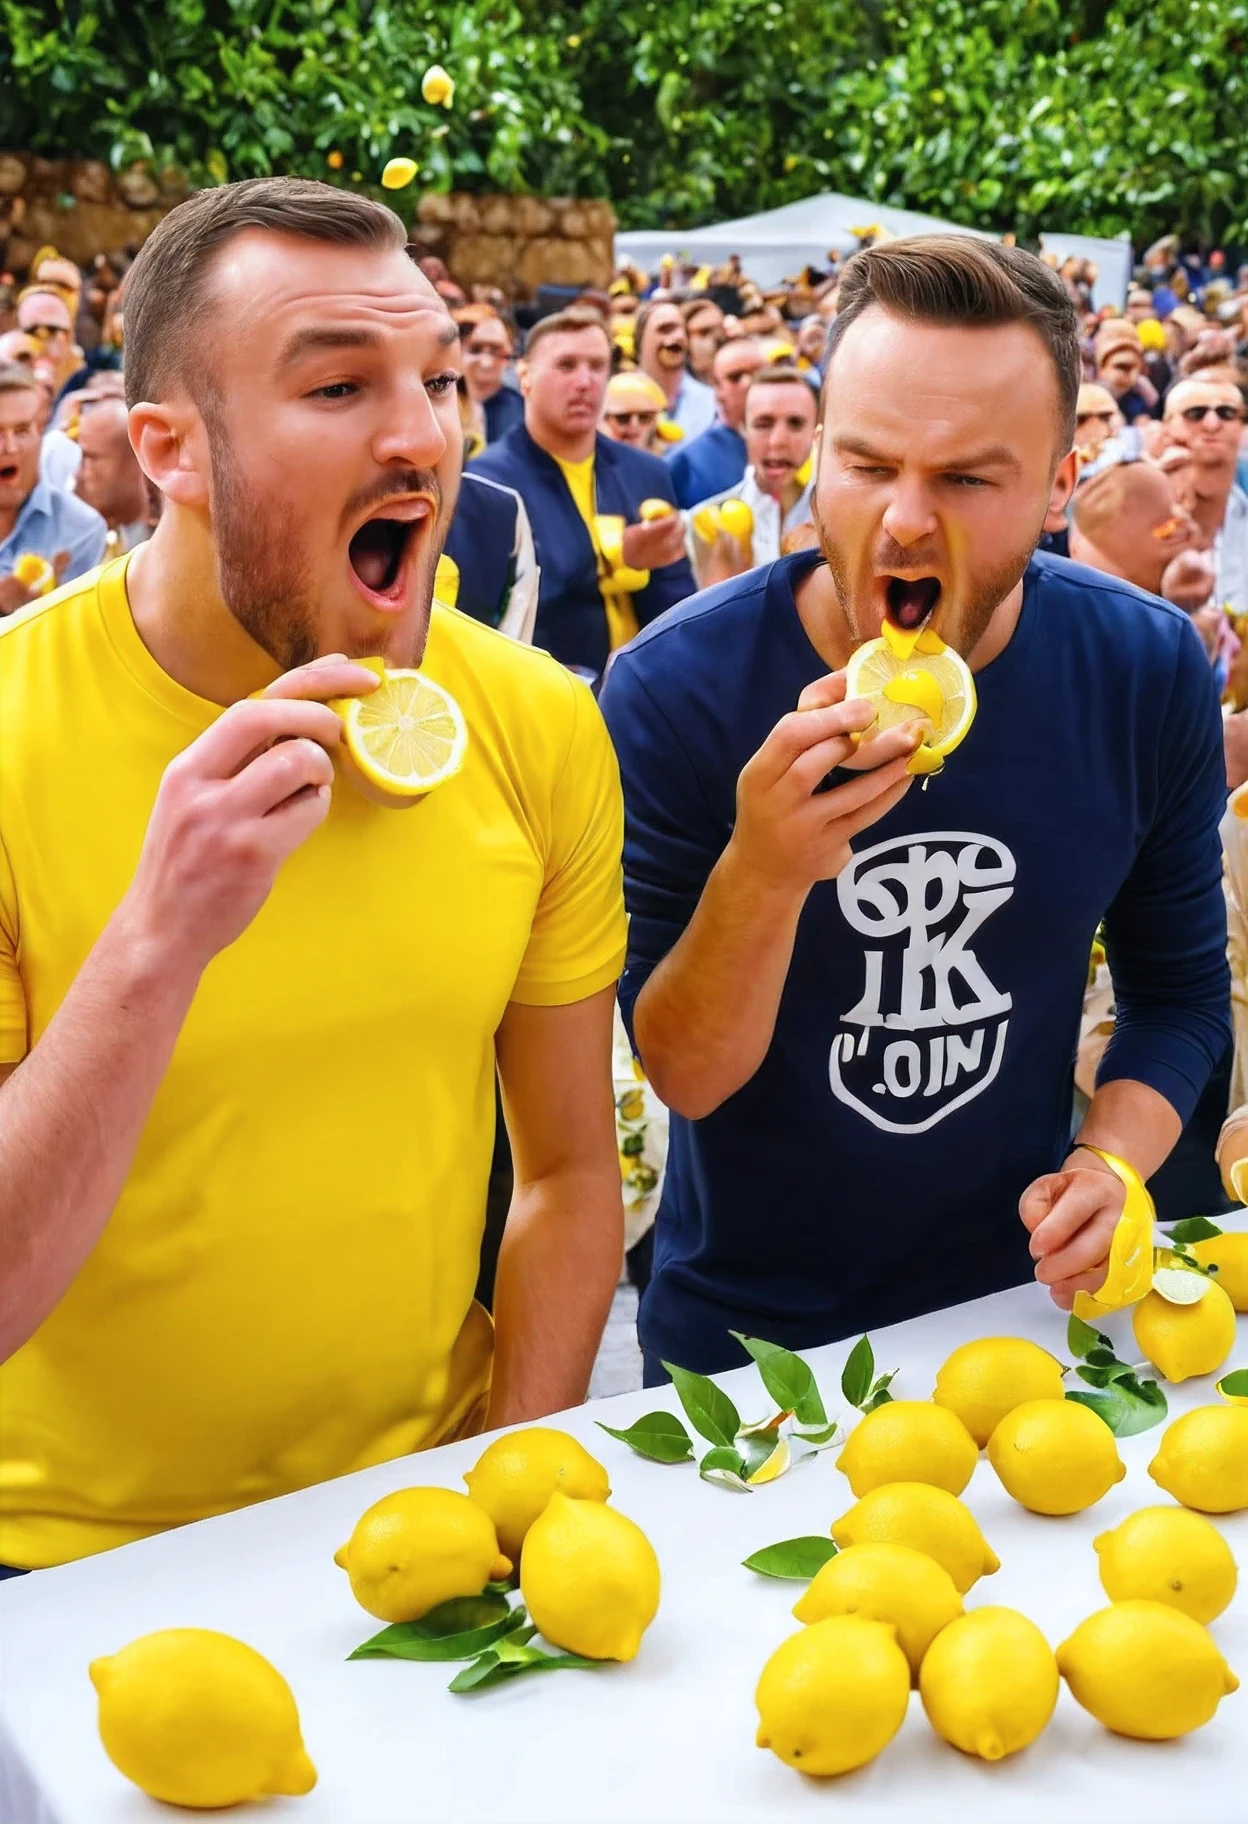 lemon eating championship, competition between 2 guys,Audience,judges,speed eating lemons,8k rendering,Photorealism,